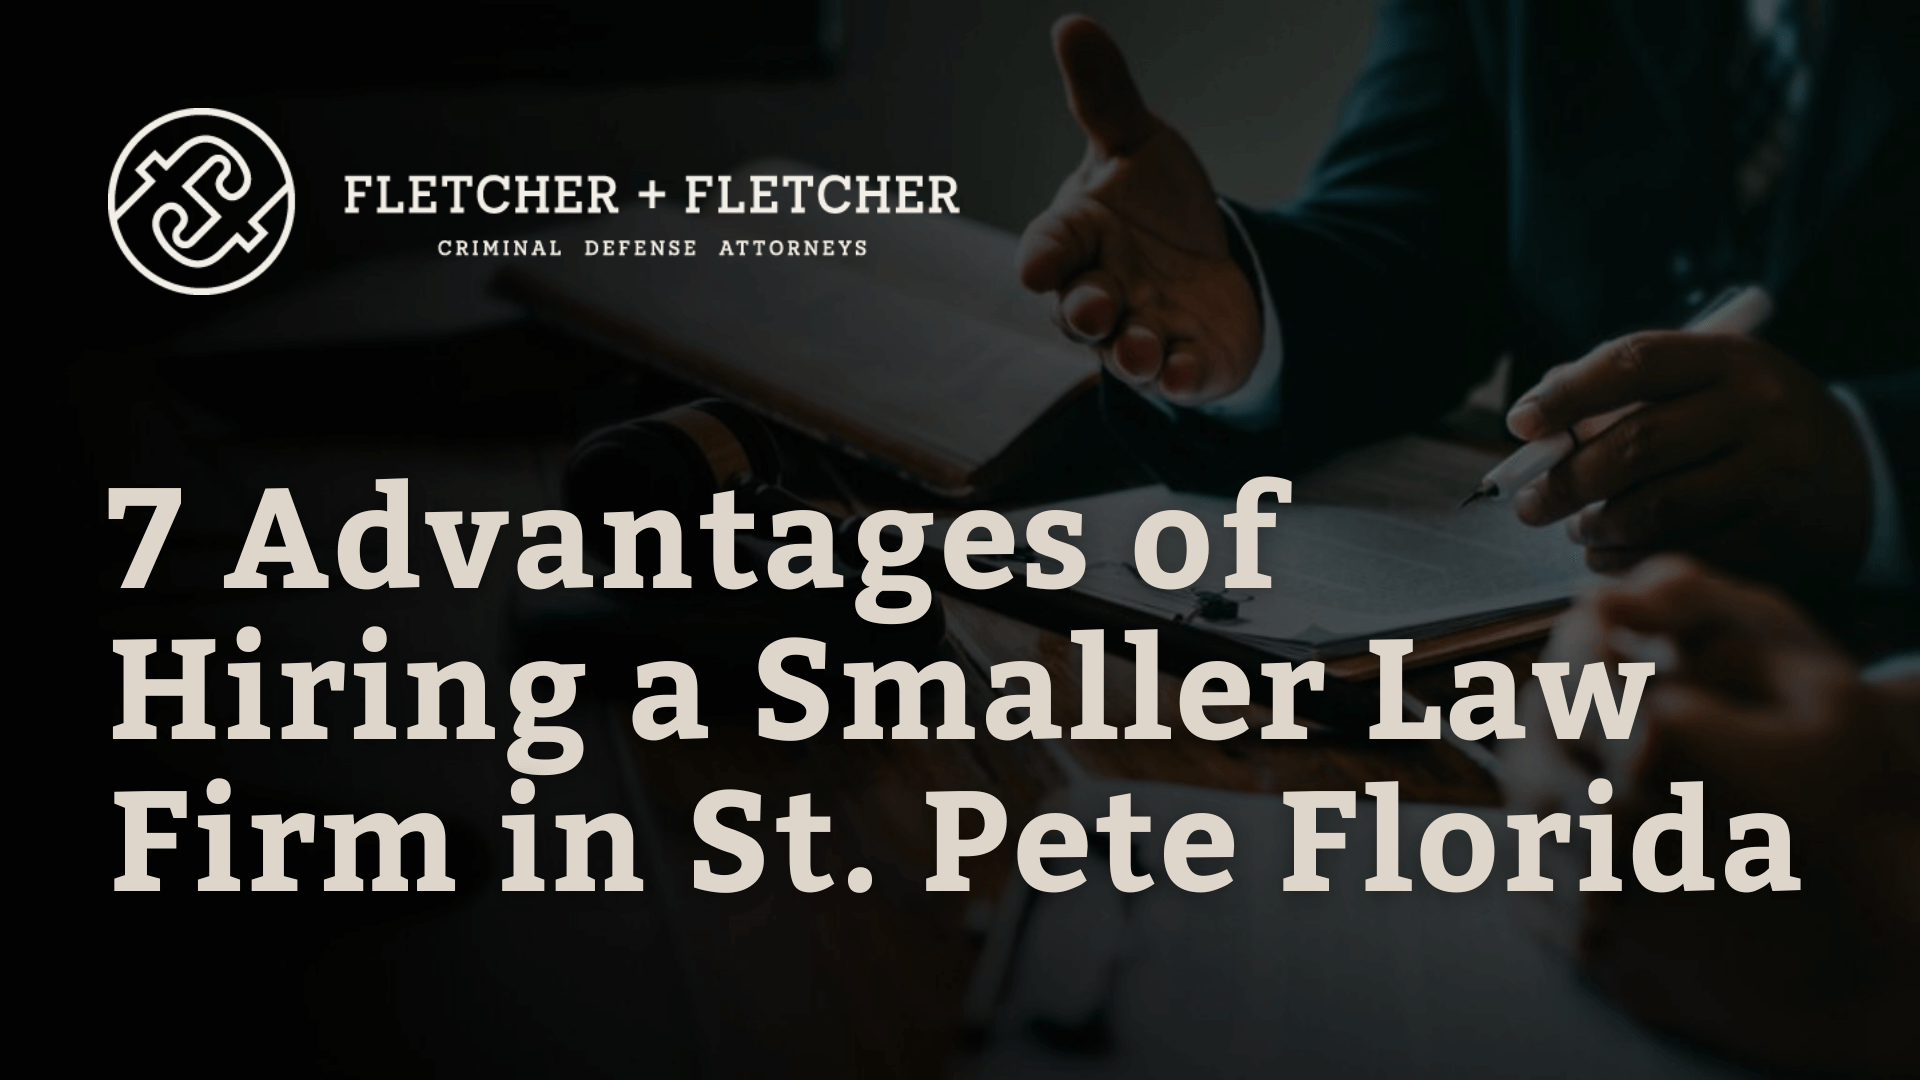 7 Advantages of Hiring a Smaller Law Firm in St. Petersburg Florida - Fletcher Fletcher Florida criminal defense lawyers